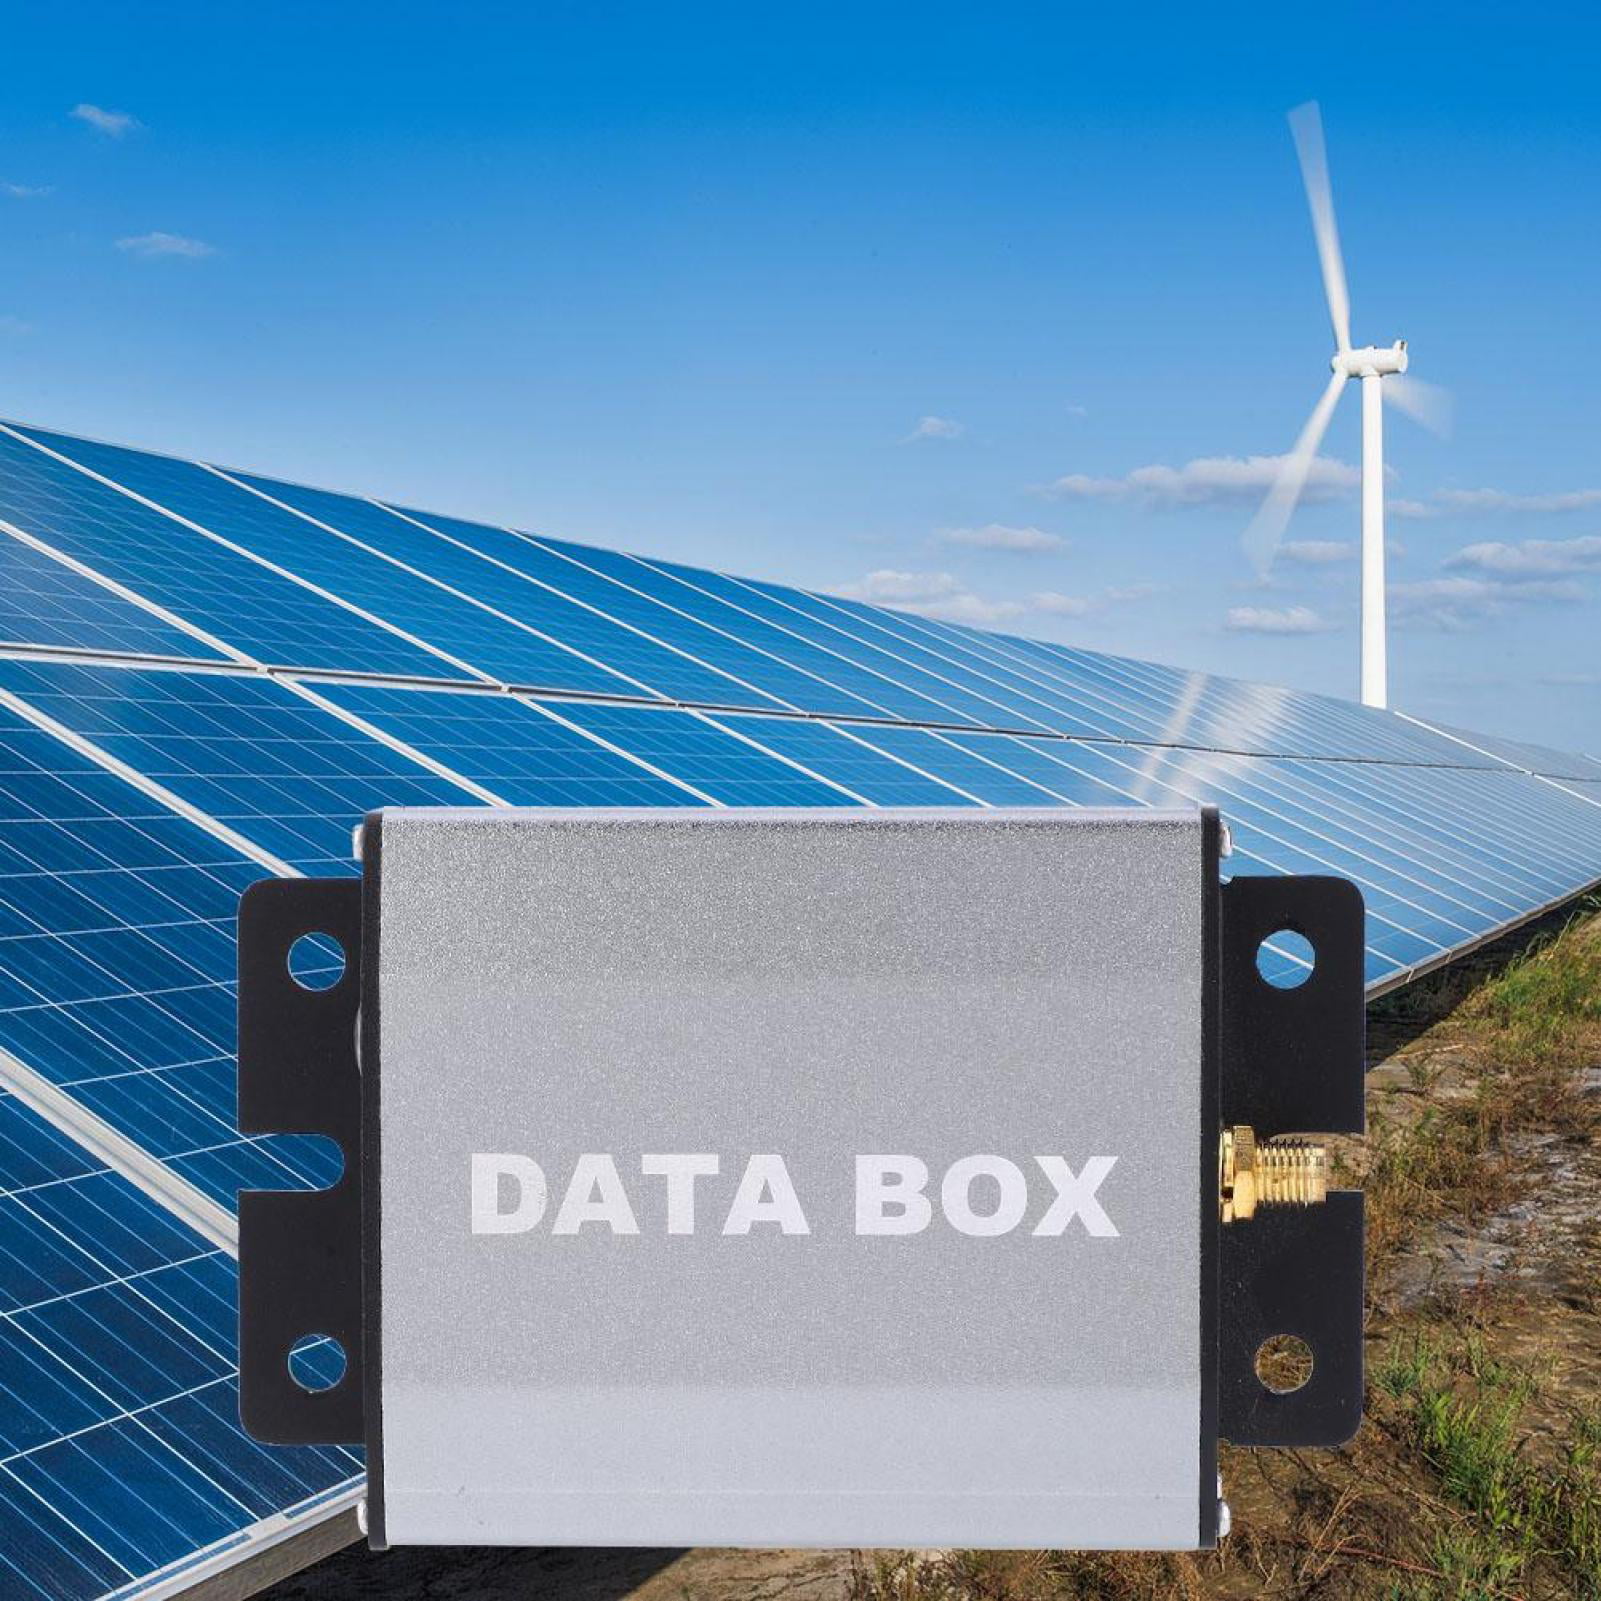 DataBox24G Solar Panel Monitoring System Data Box USB Powered 2.4G Wireless 